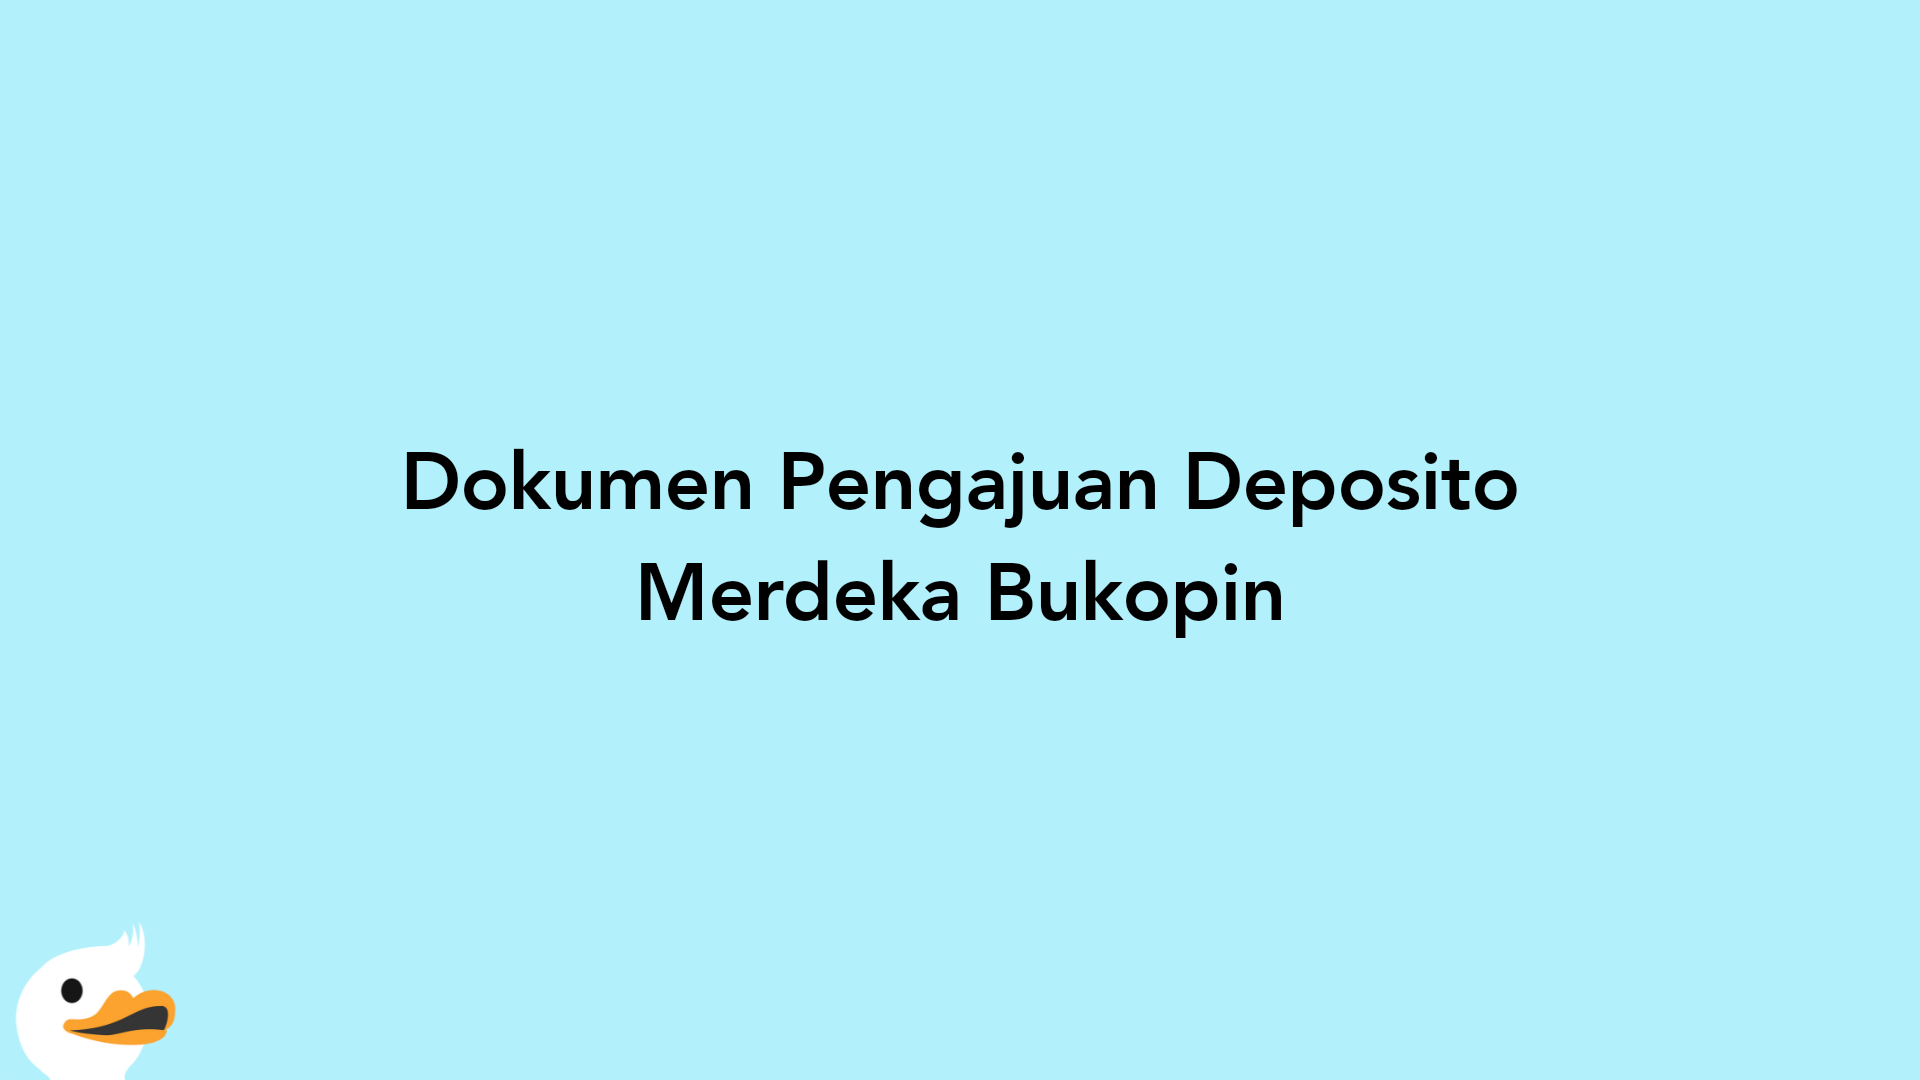 Dokumen Pengajuan Deposito Merdeka Bukopin